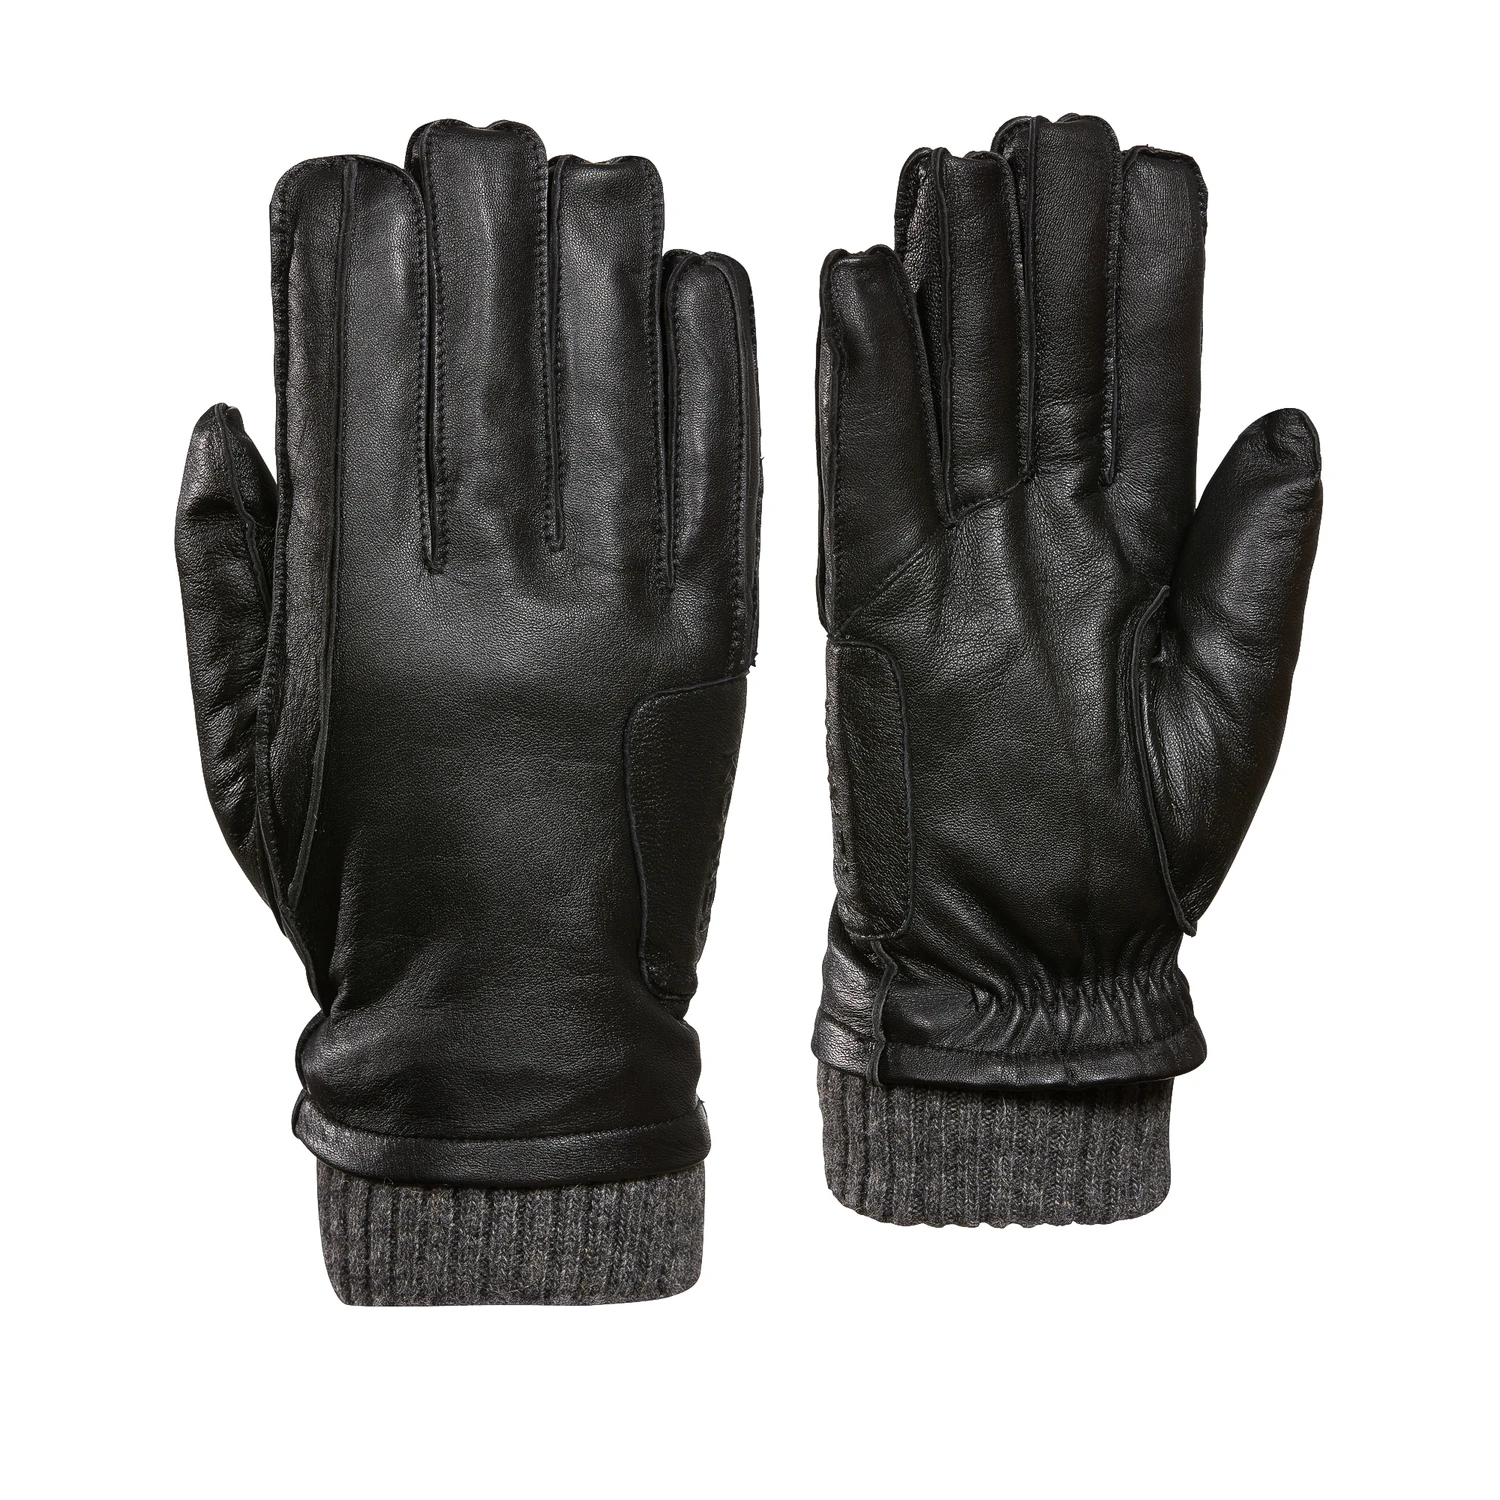 Kombi Charmer Glove - Men's